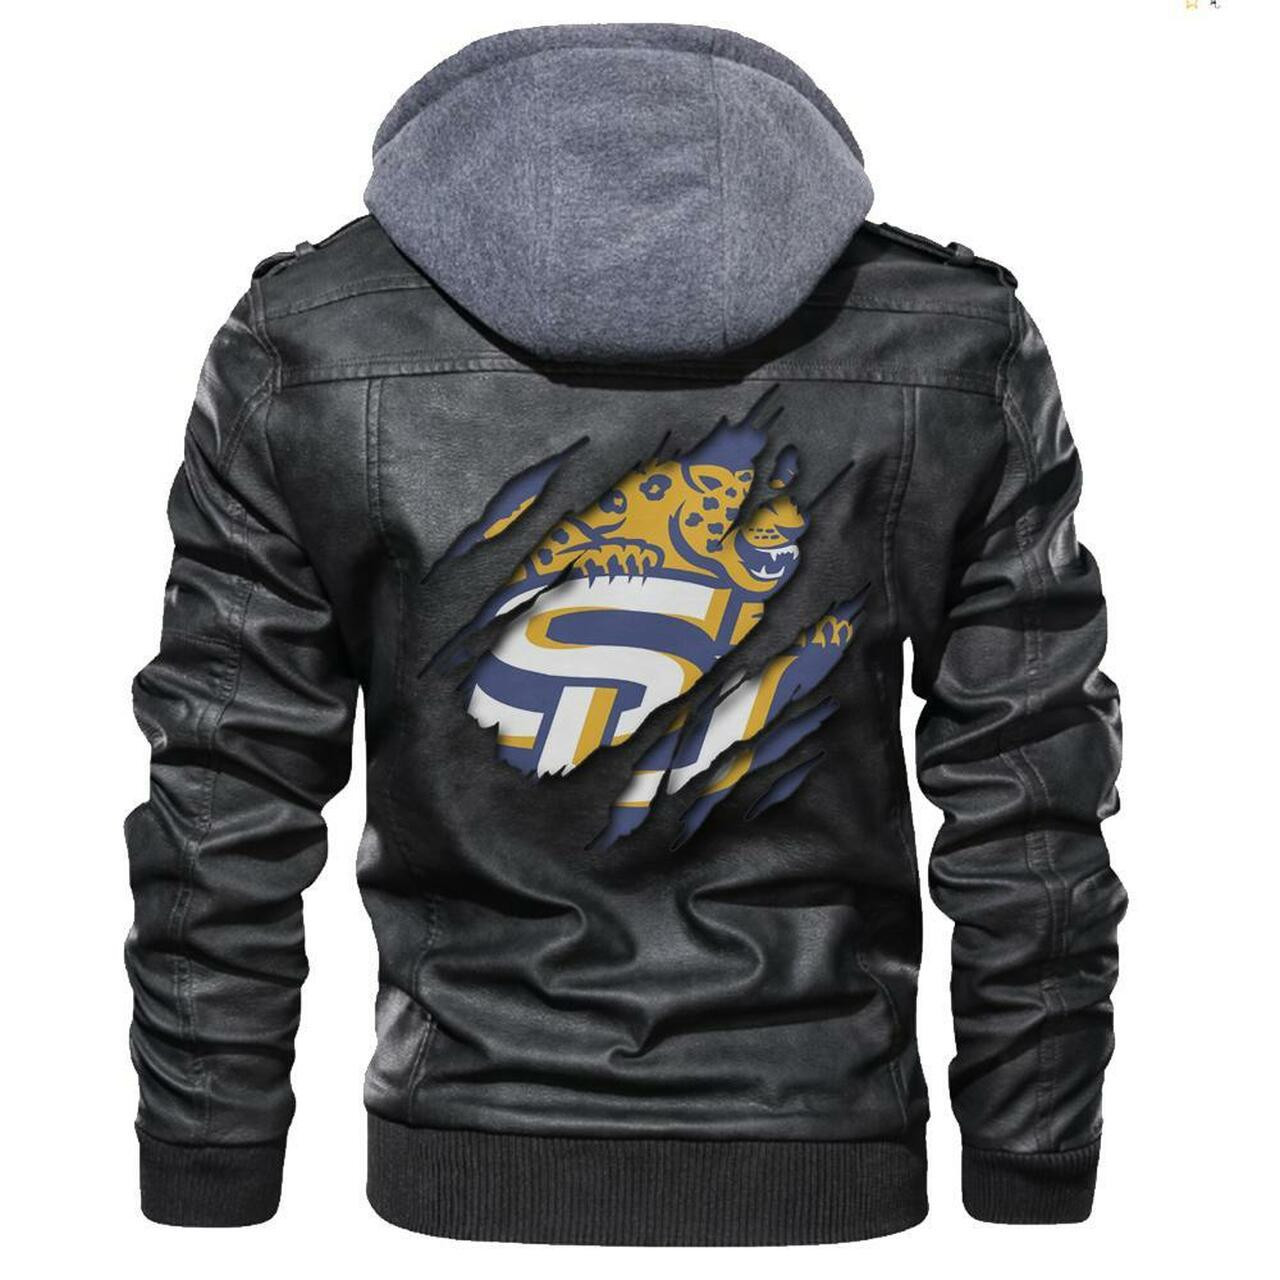 Top leather jacket Sells Best on Techcomshop 50